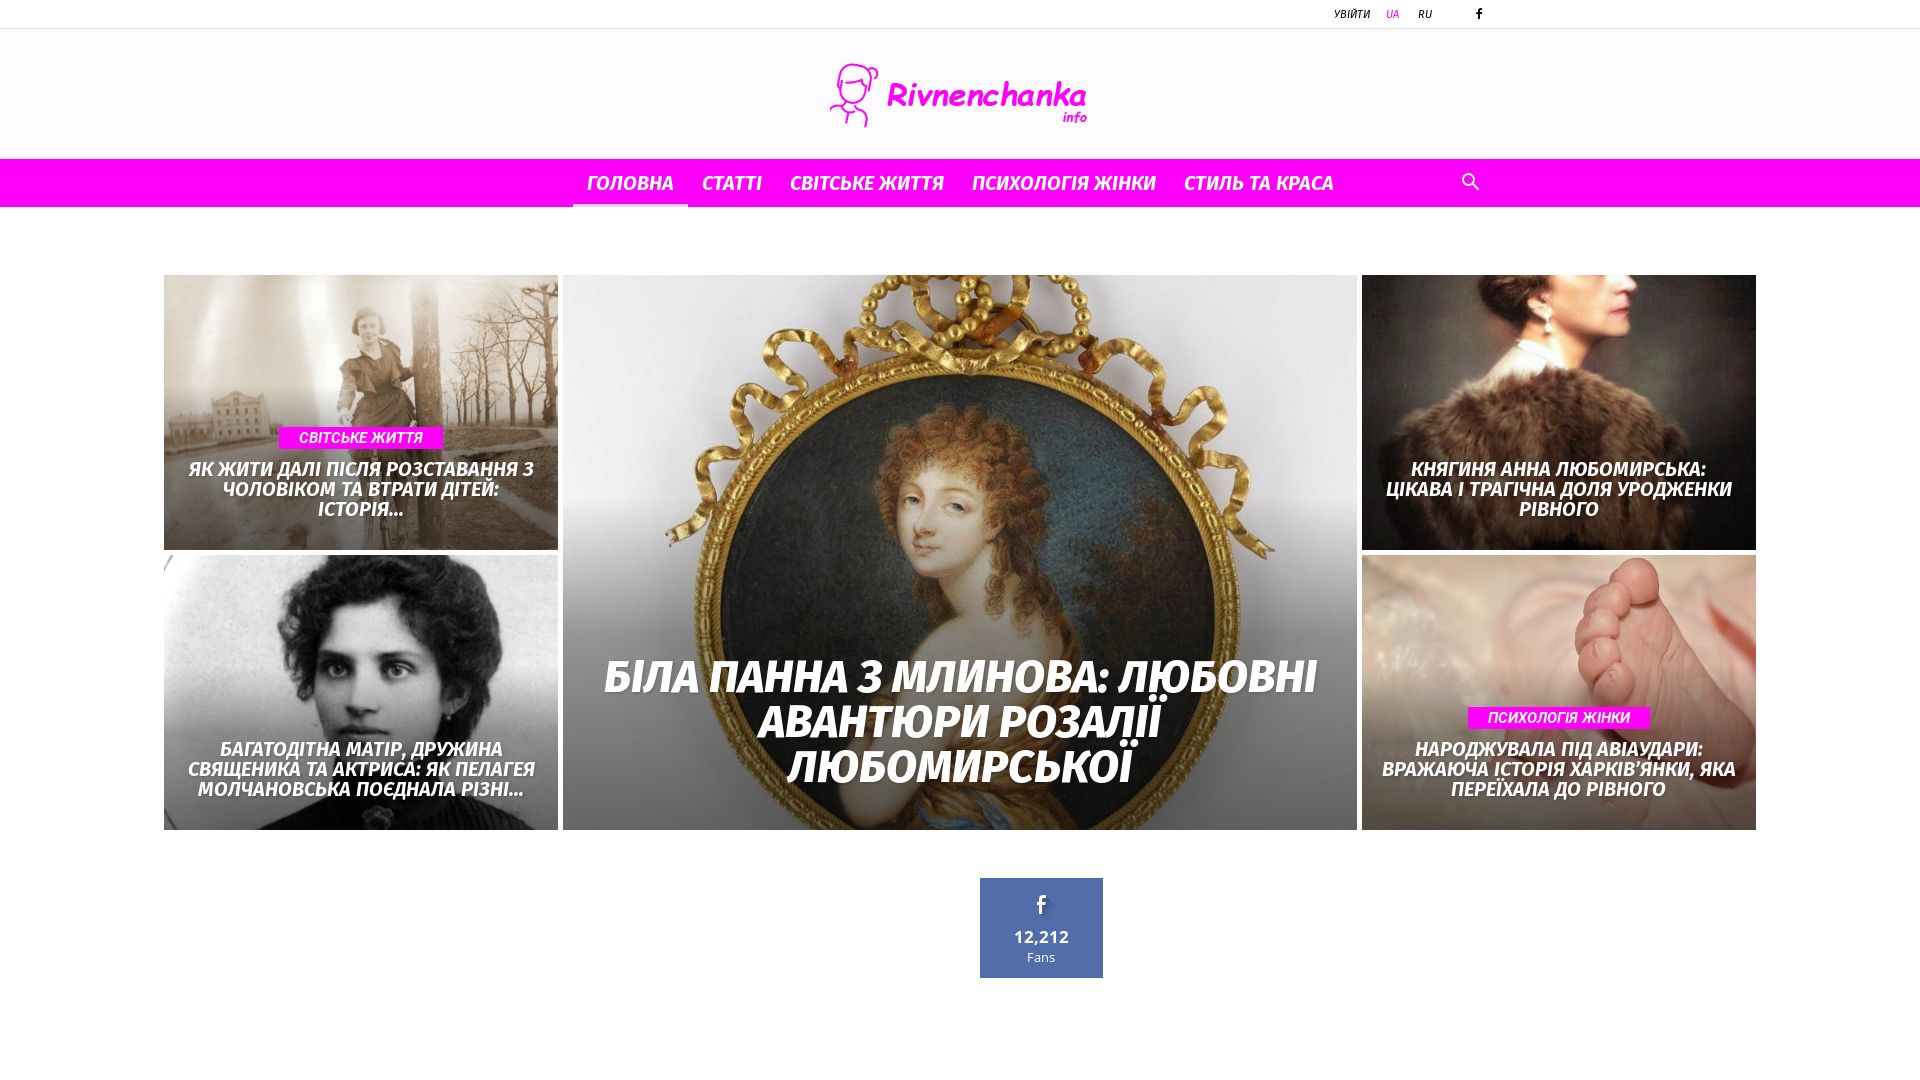 Status do site rivnenchanka.info está   ONLINE